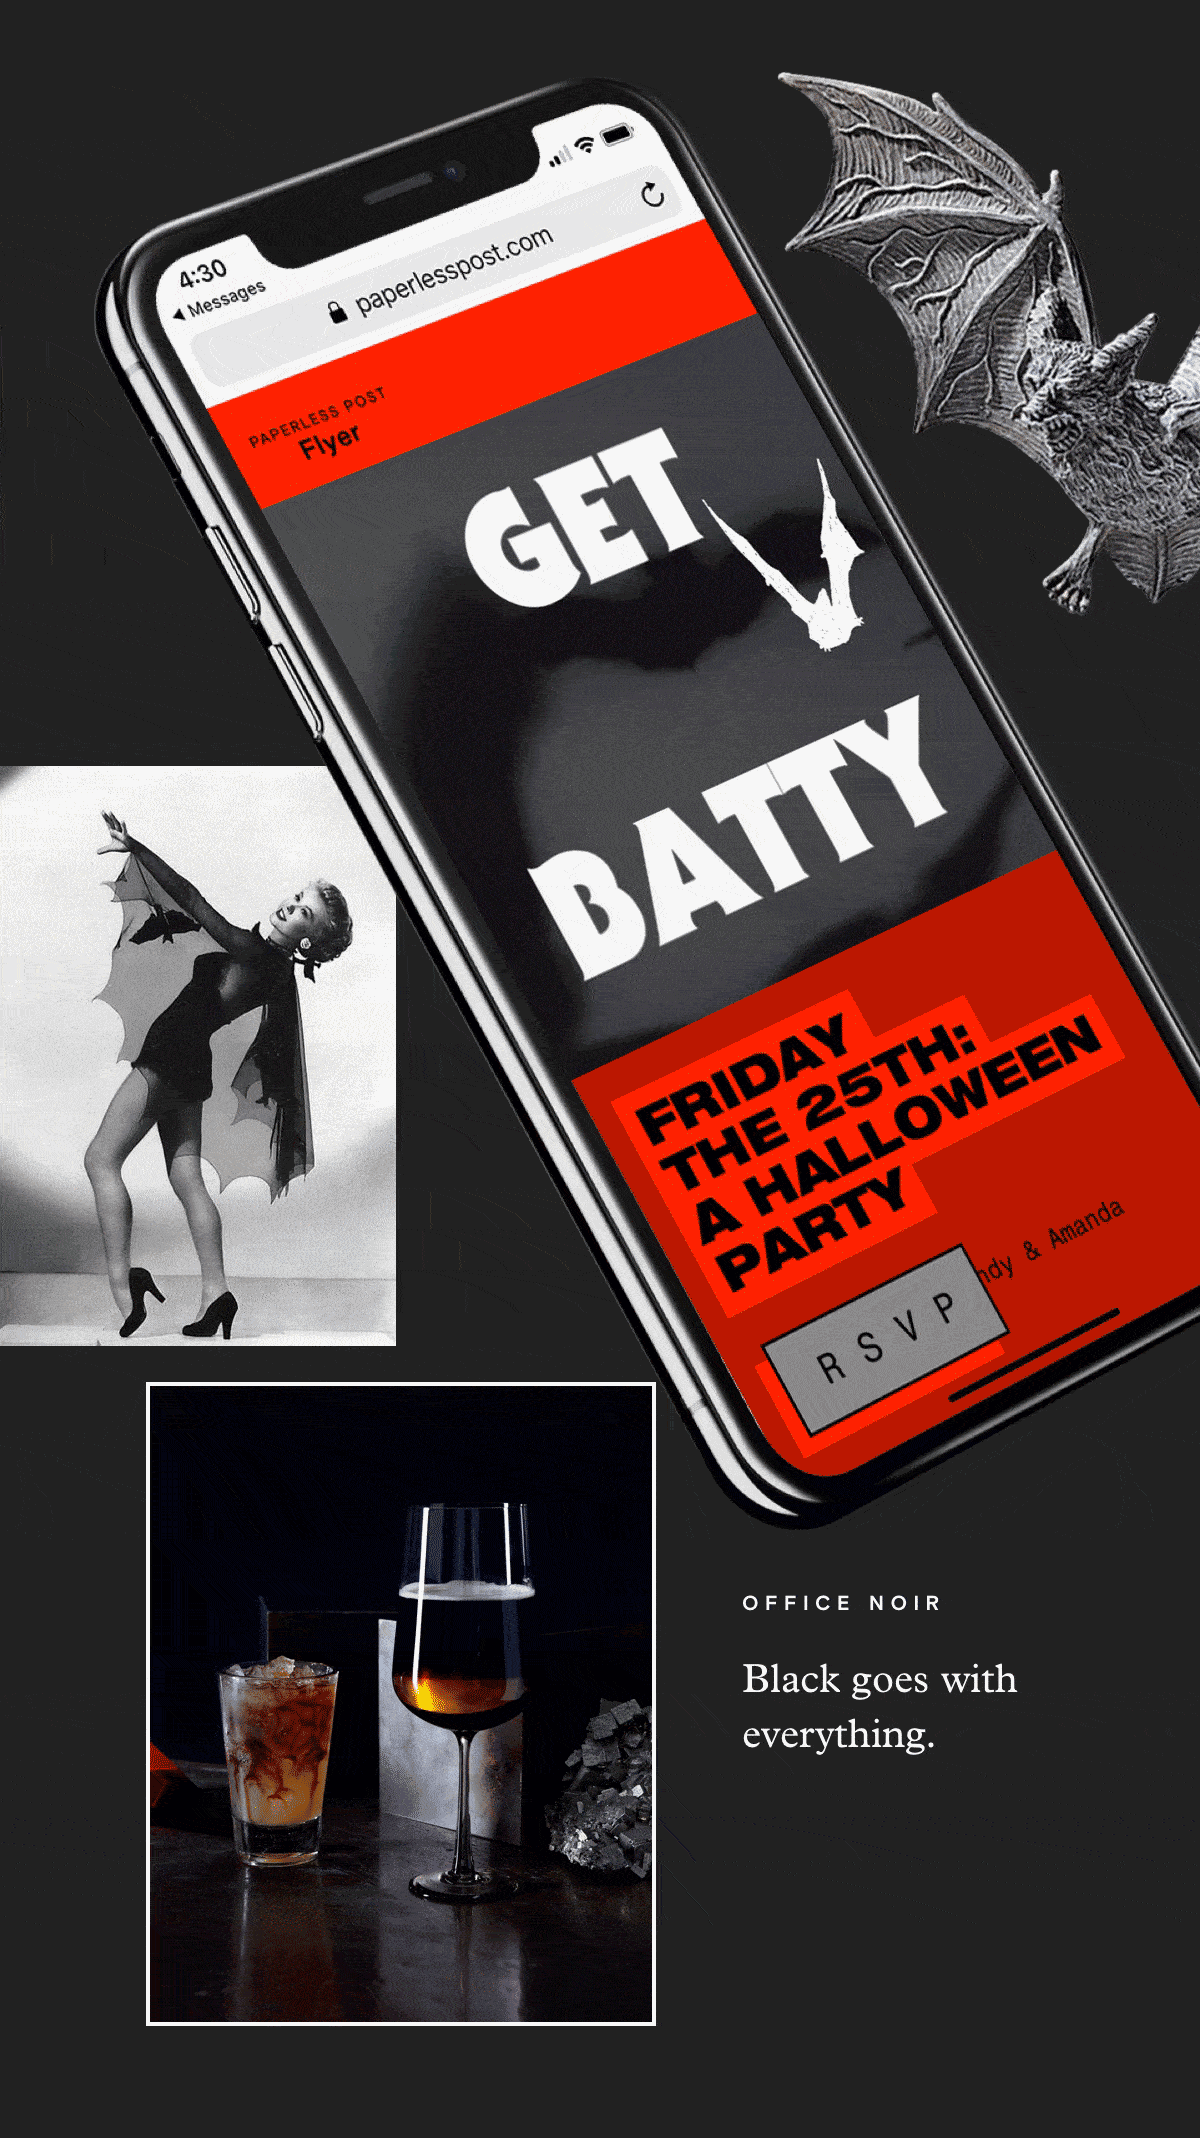 bat halloween invitation and party inspiration